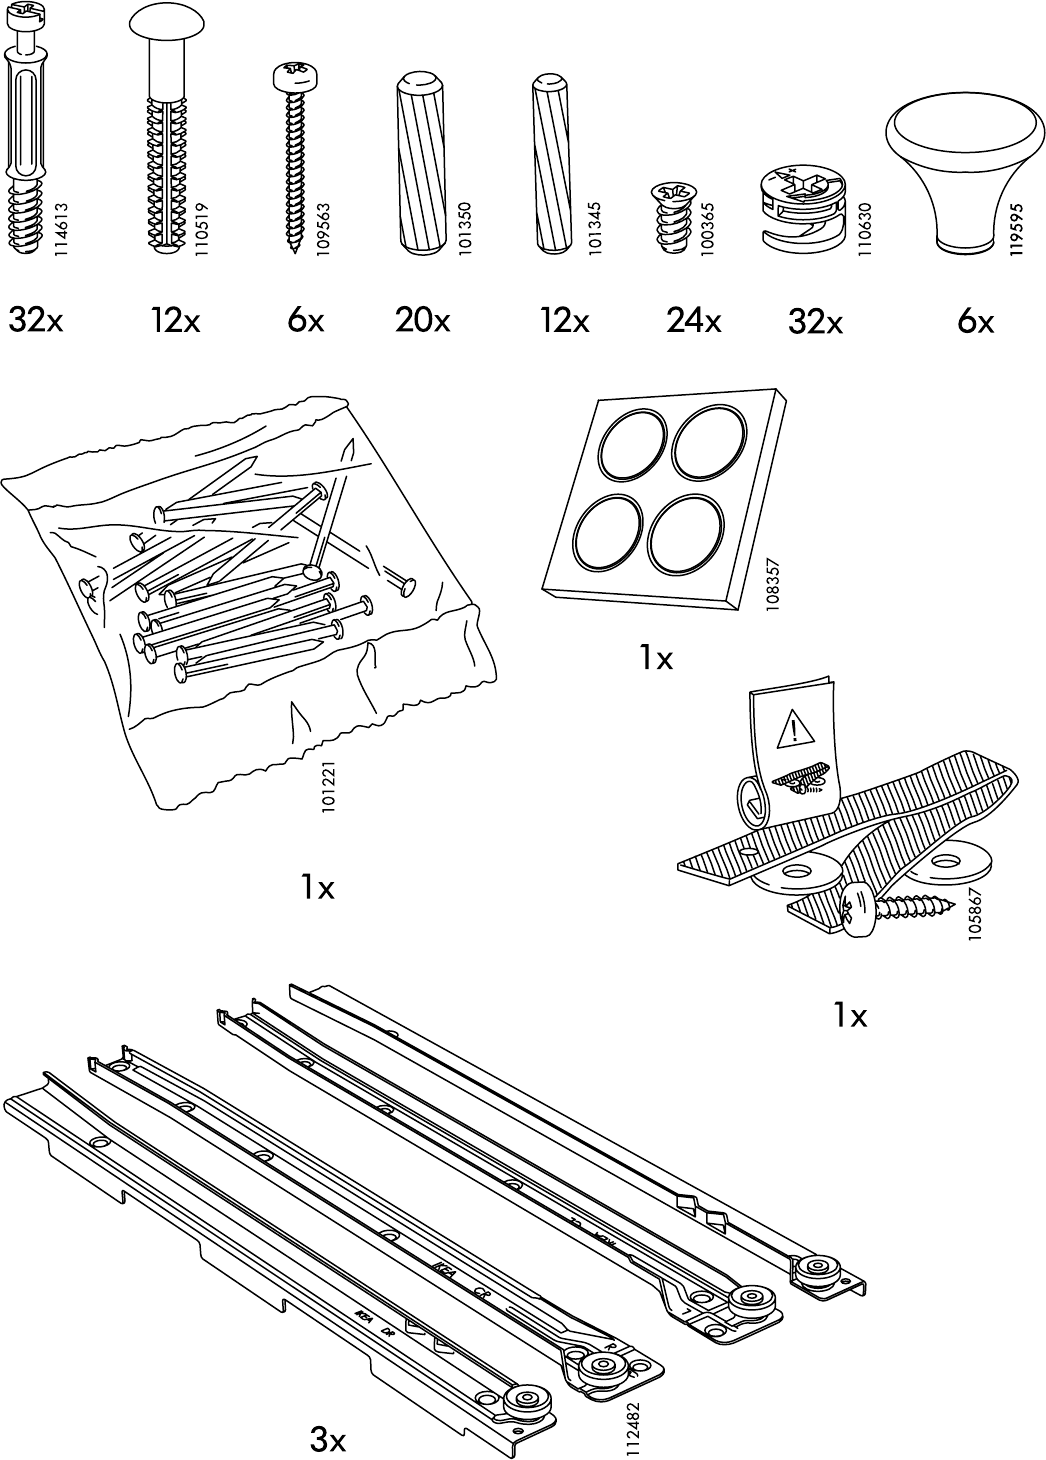 Ikea Koppang Chest W 20 Drawers Assembly Instruction